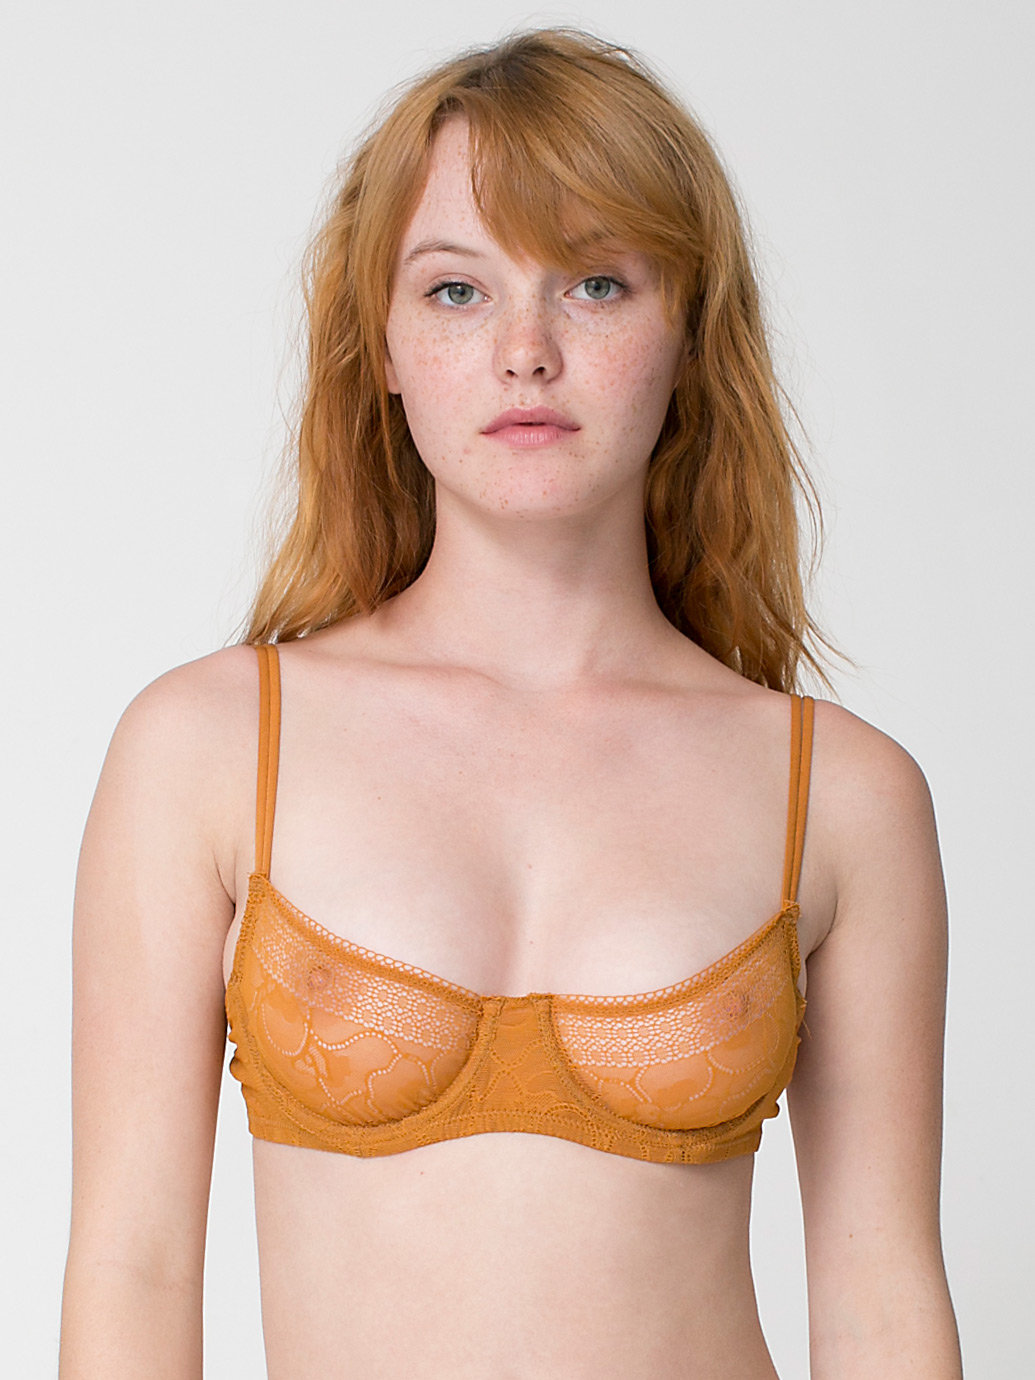 nude sexy suzy hot girls wallpaper #bra #kacyannehill #lingerie #model #redhead #seethru #smcmll